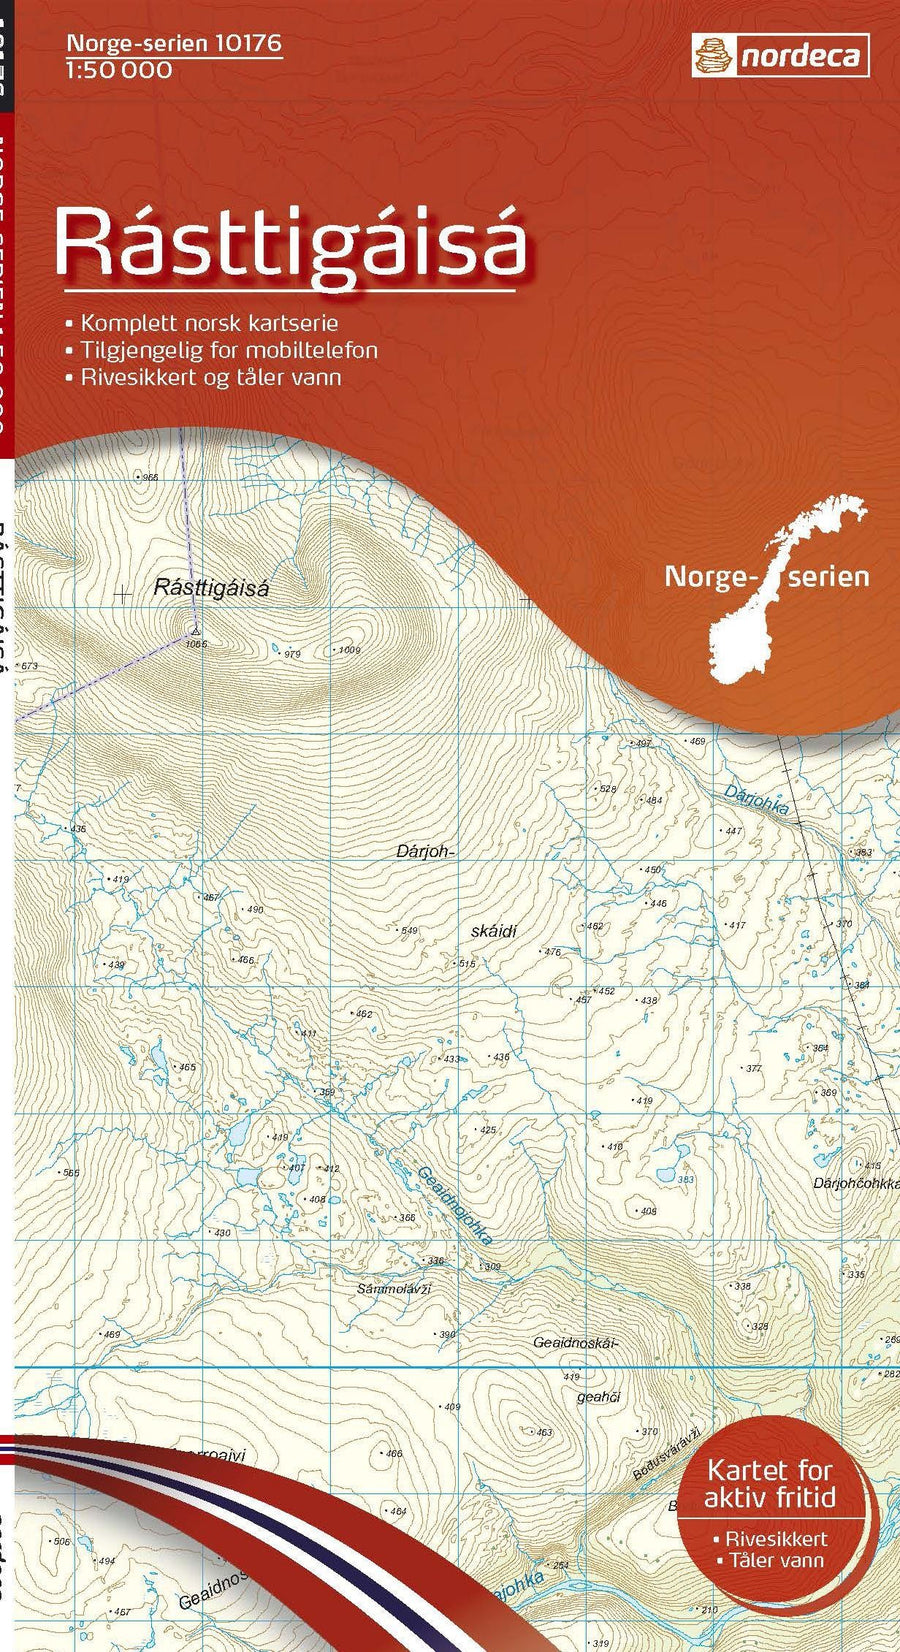 Carte de randonnée n° 10176 - Rasttigaisa (Norvège) | Nordeca - Norge-serien carte pliée Nordeca 